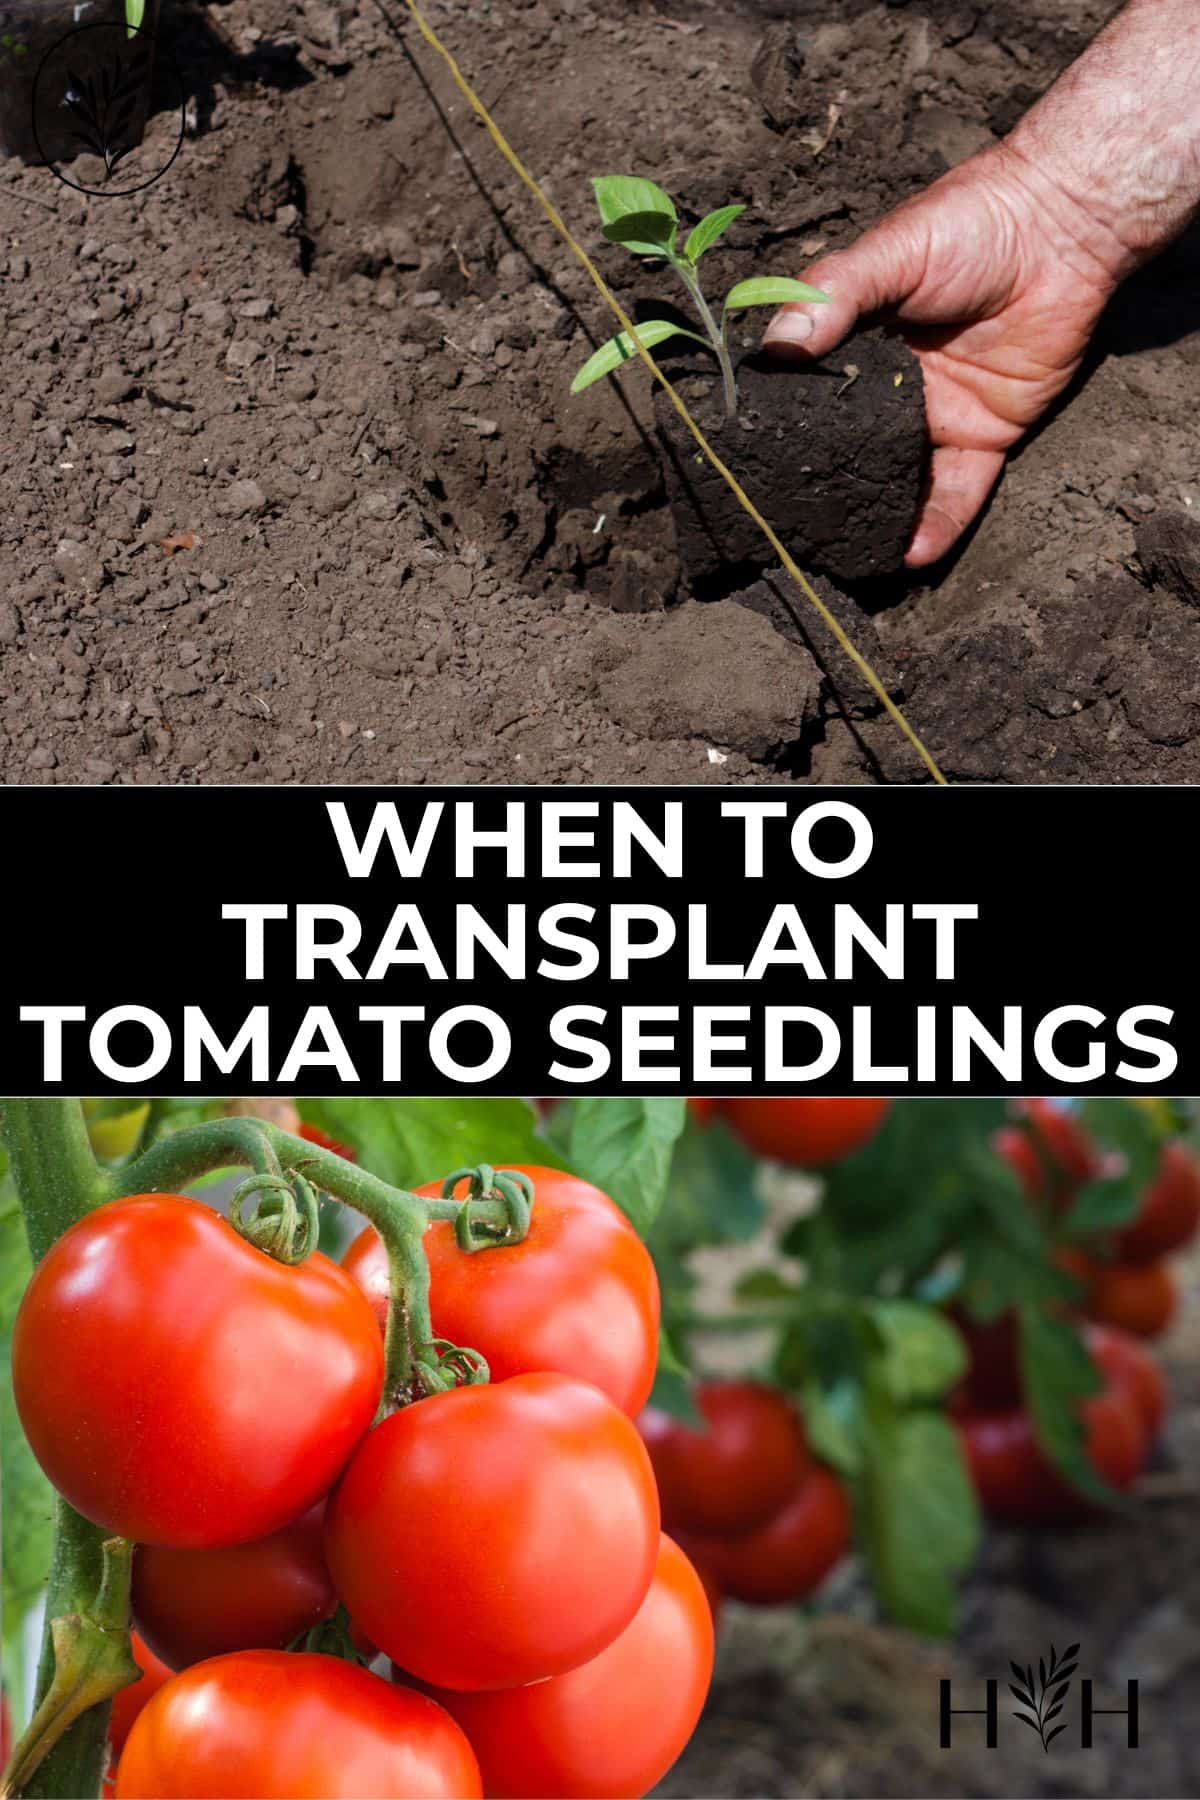 When to transplant tomato seedlings via @home4theharvest